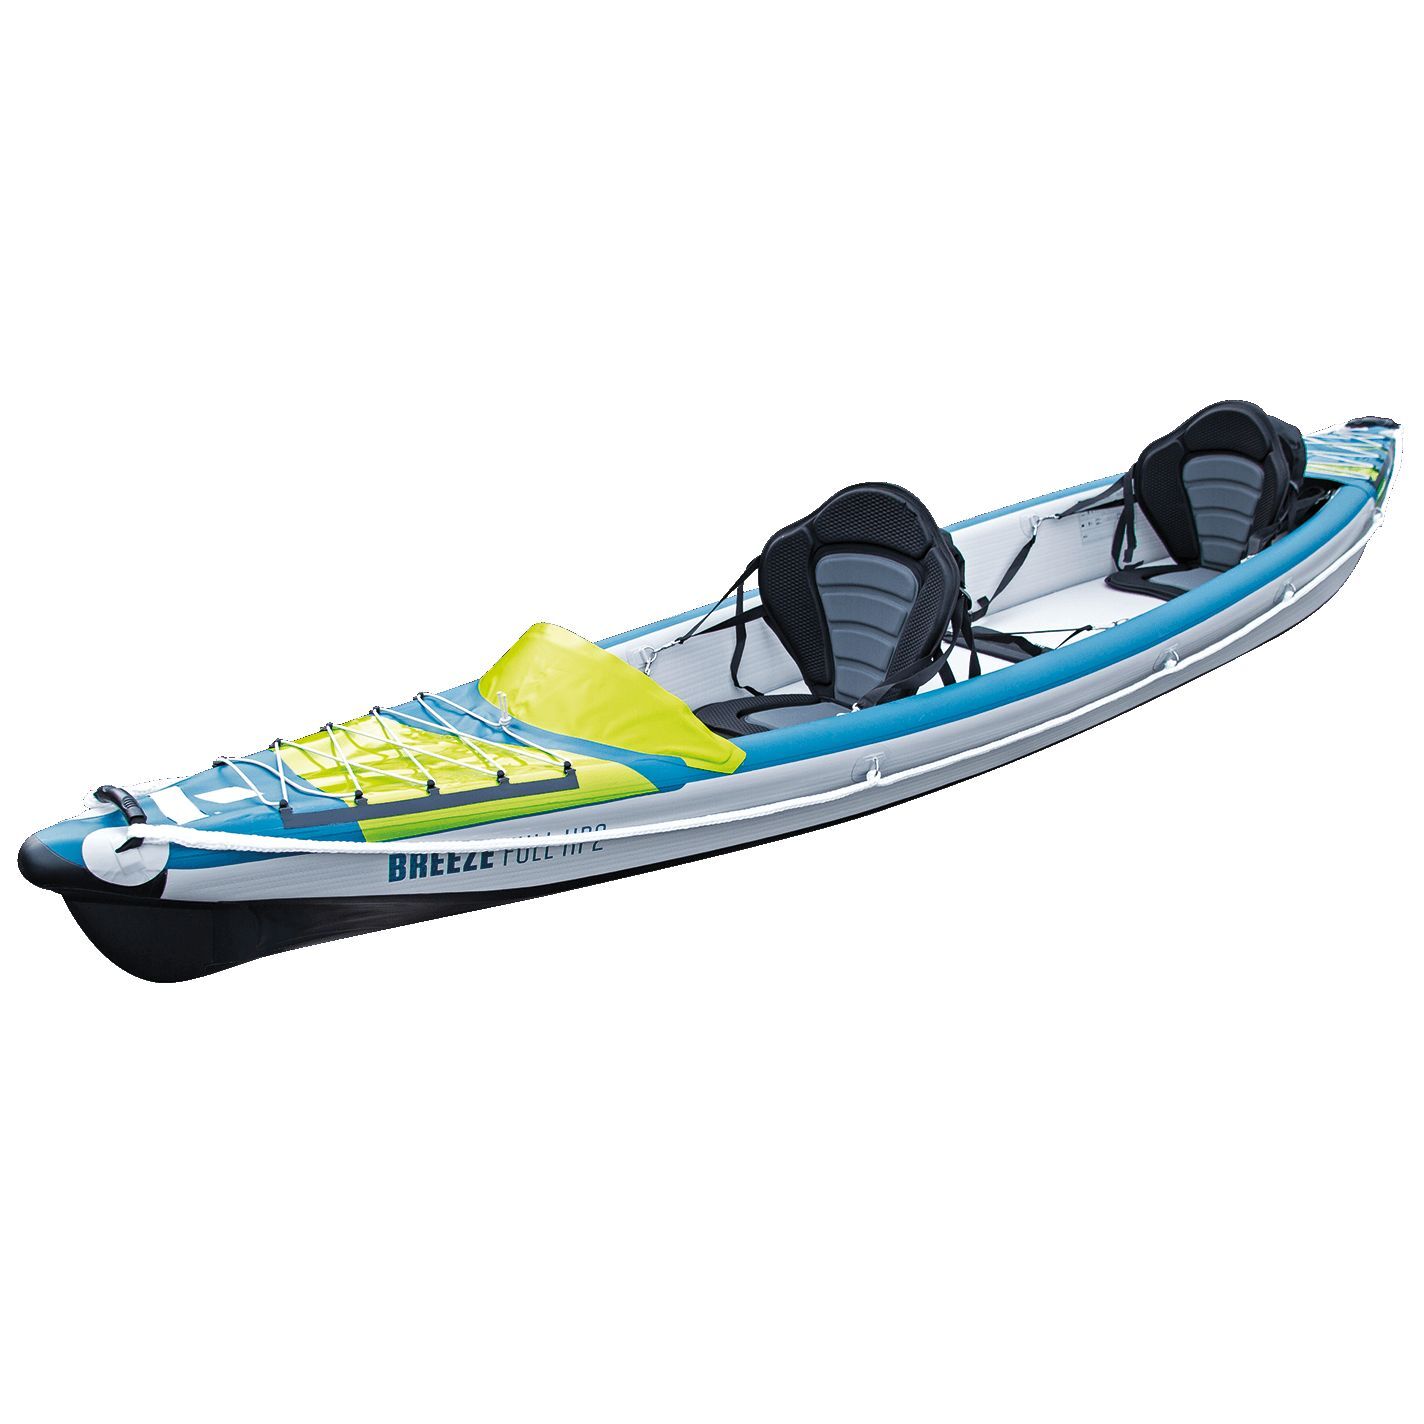 Tahe Outdoor Kayak Air Breeze Full Hp2 - Uppblåsbar kajak